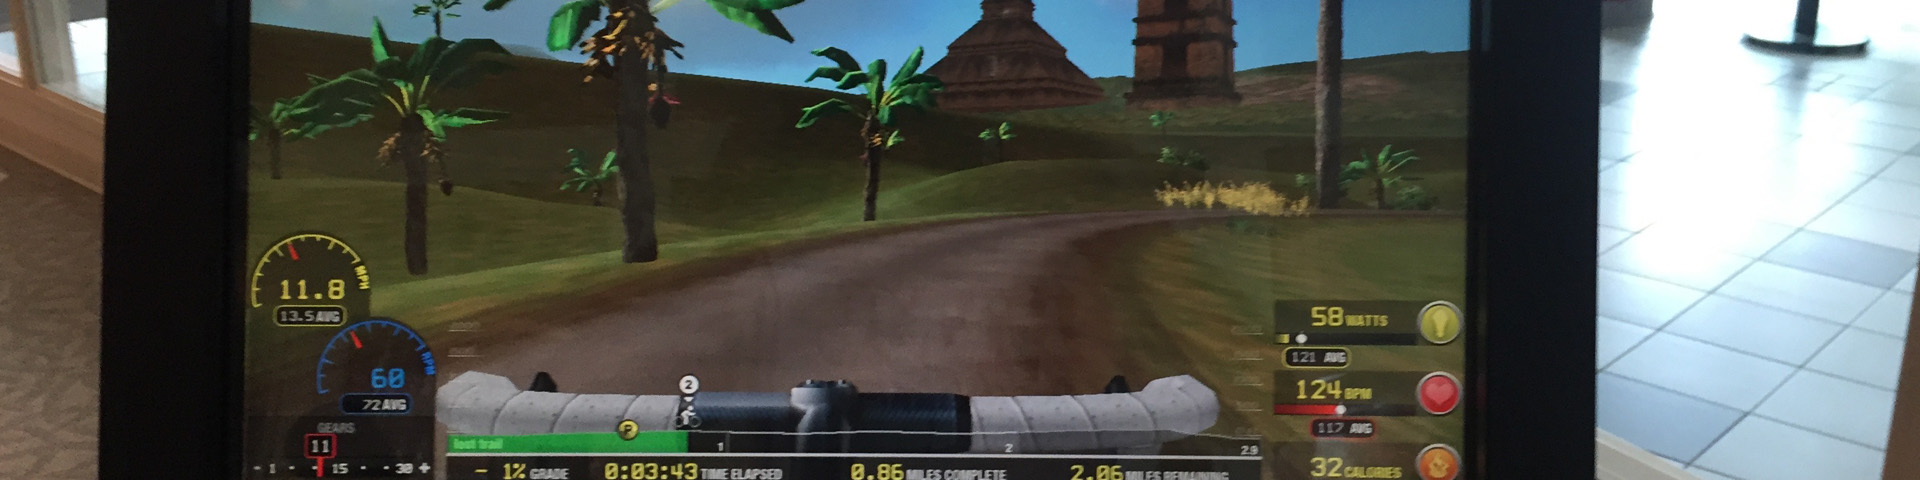 A screenshot of my virtual bike ride through tropical ruins.